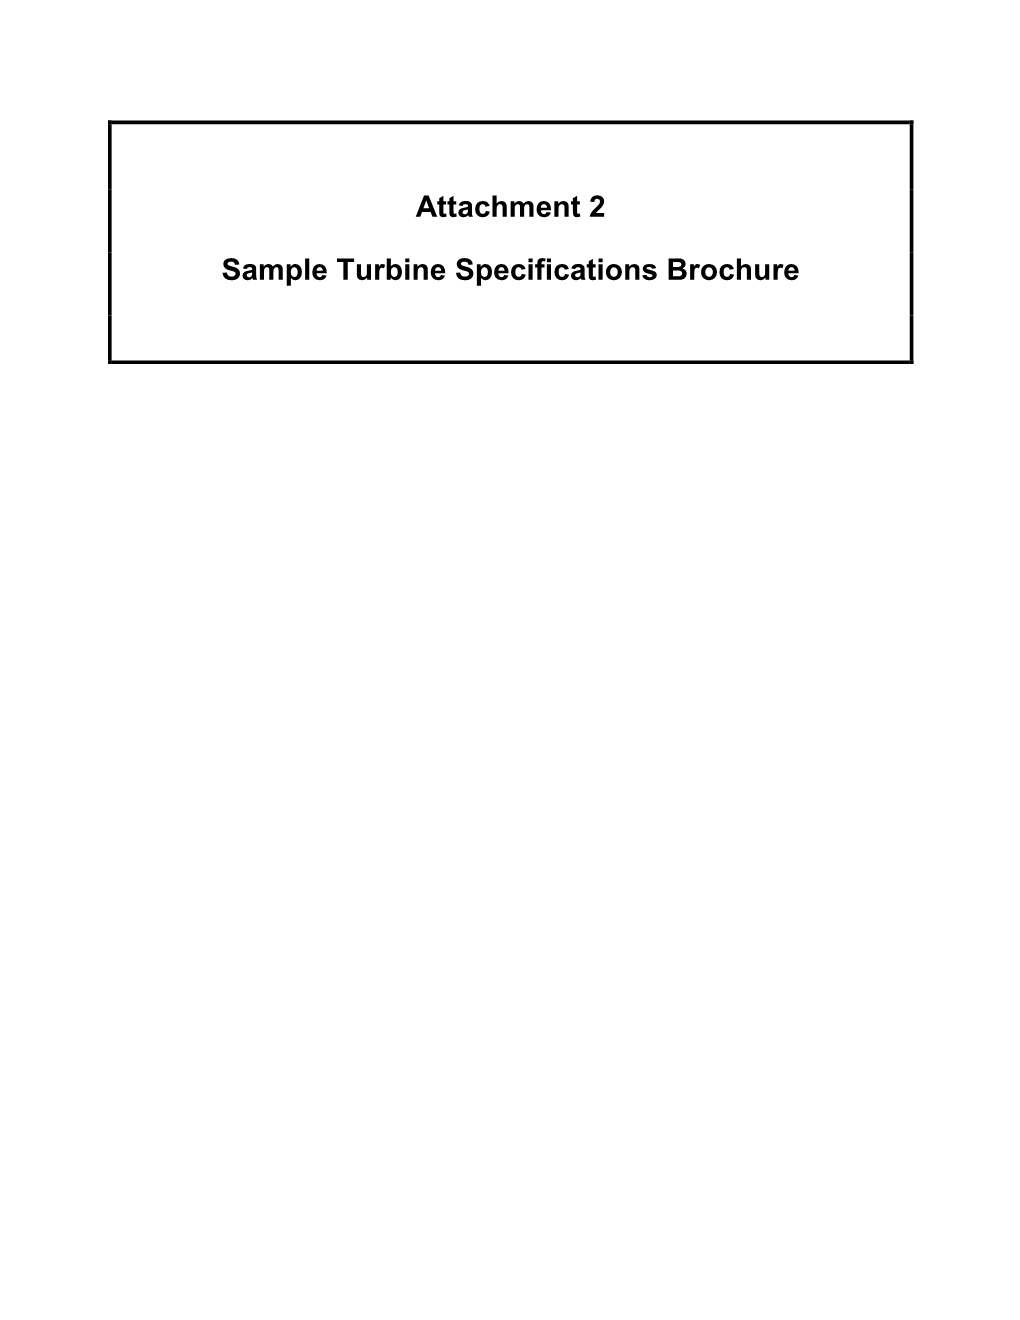 Attachment 2 Sample Turbine Specifications Brochure